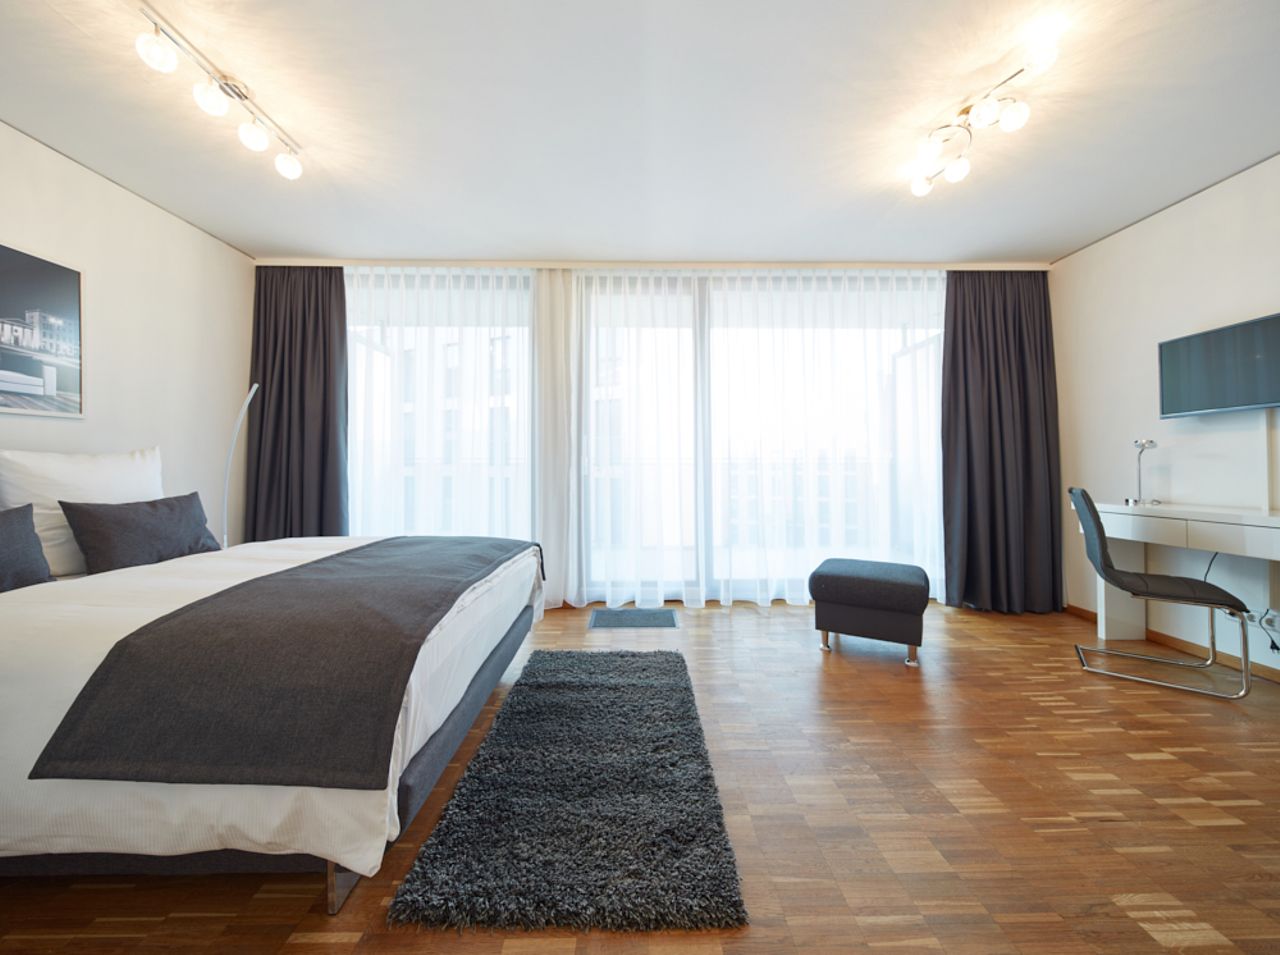 New & quiet loft located in Mitte, Berlin